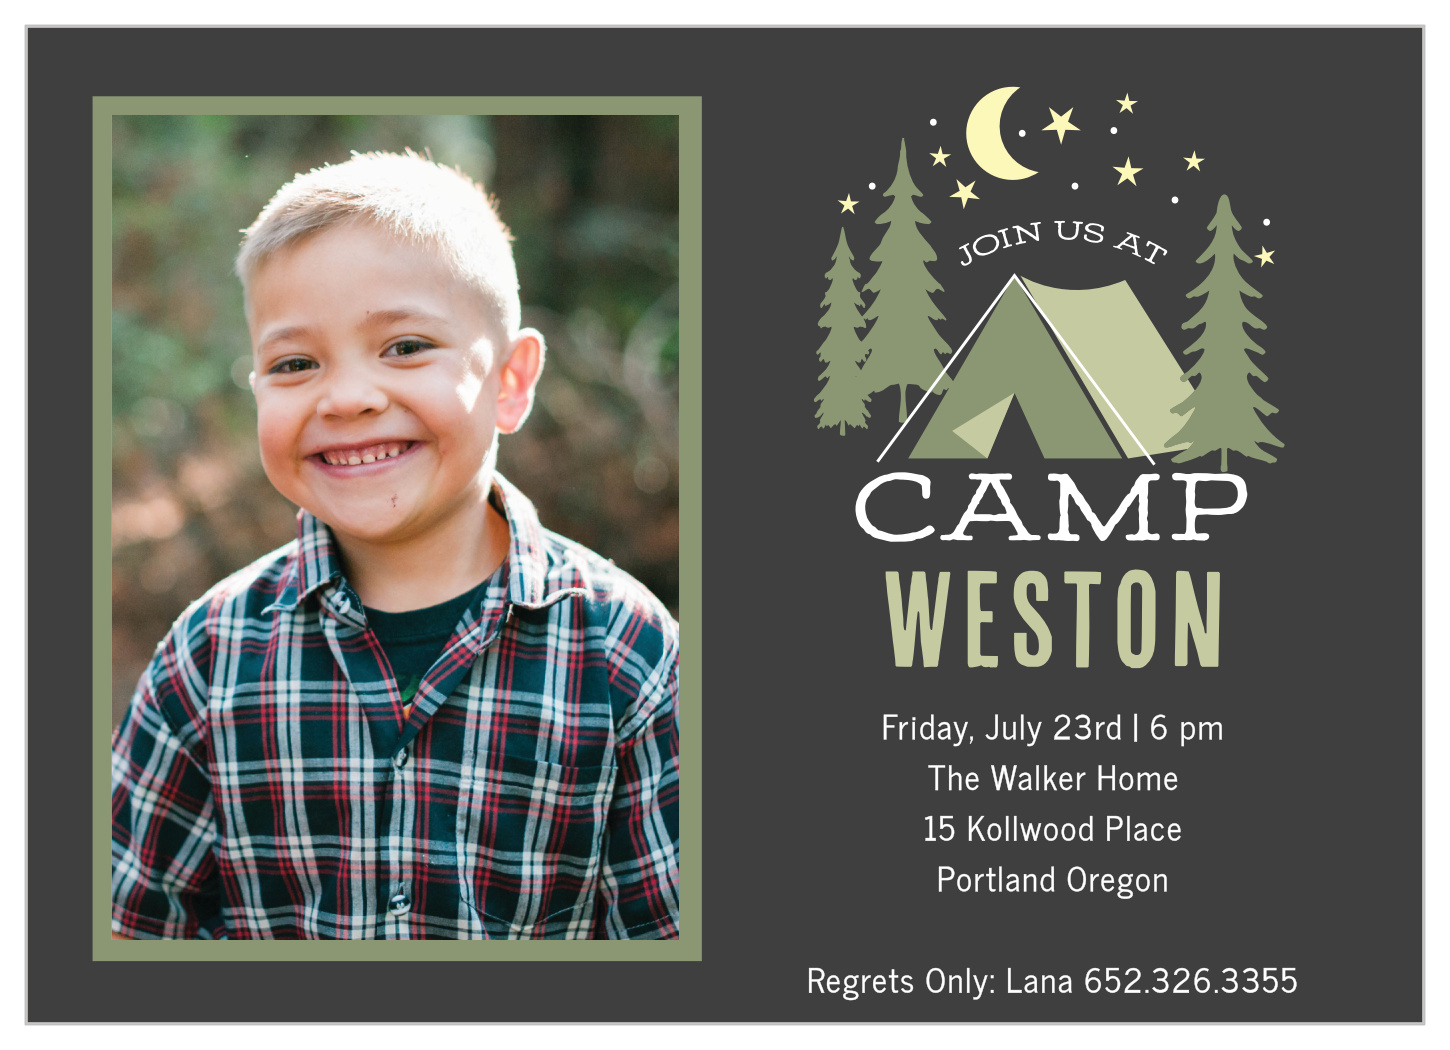 Cascades Camping Photo Children's Birthday Invitations